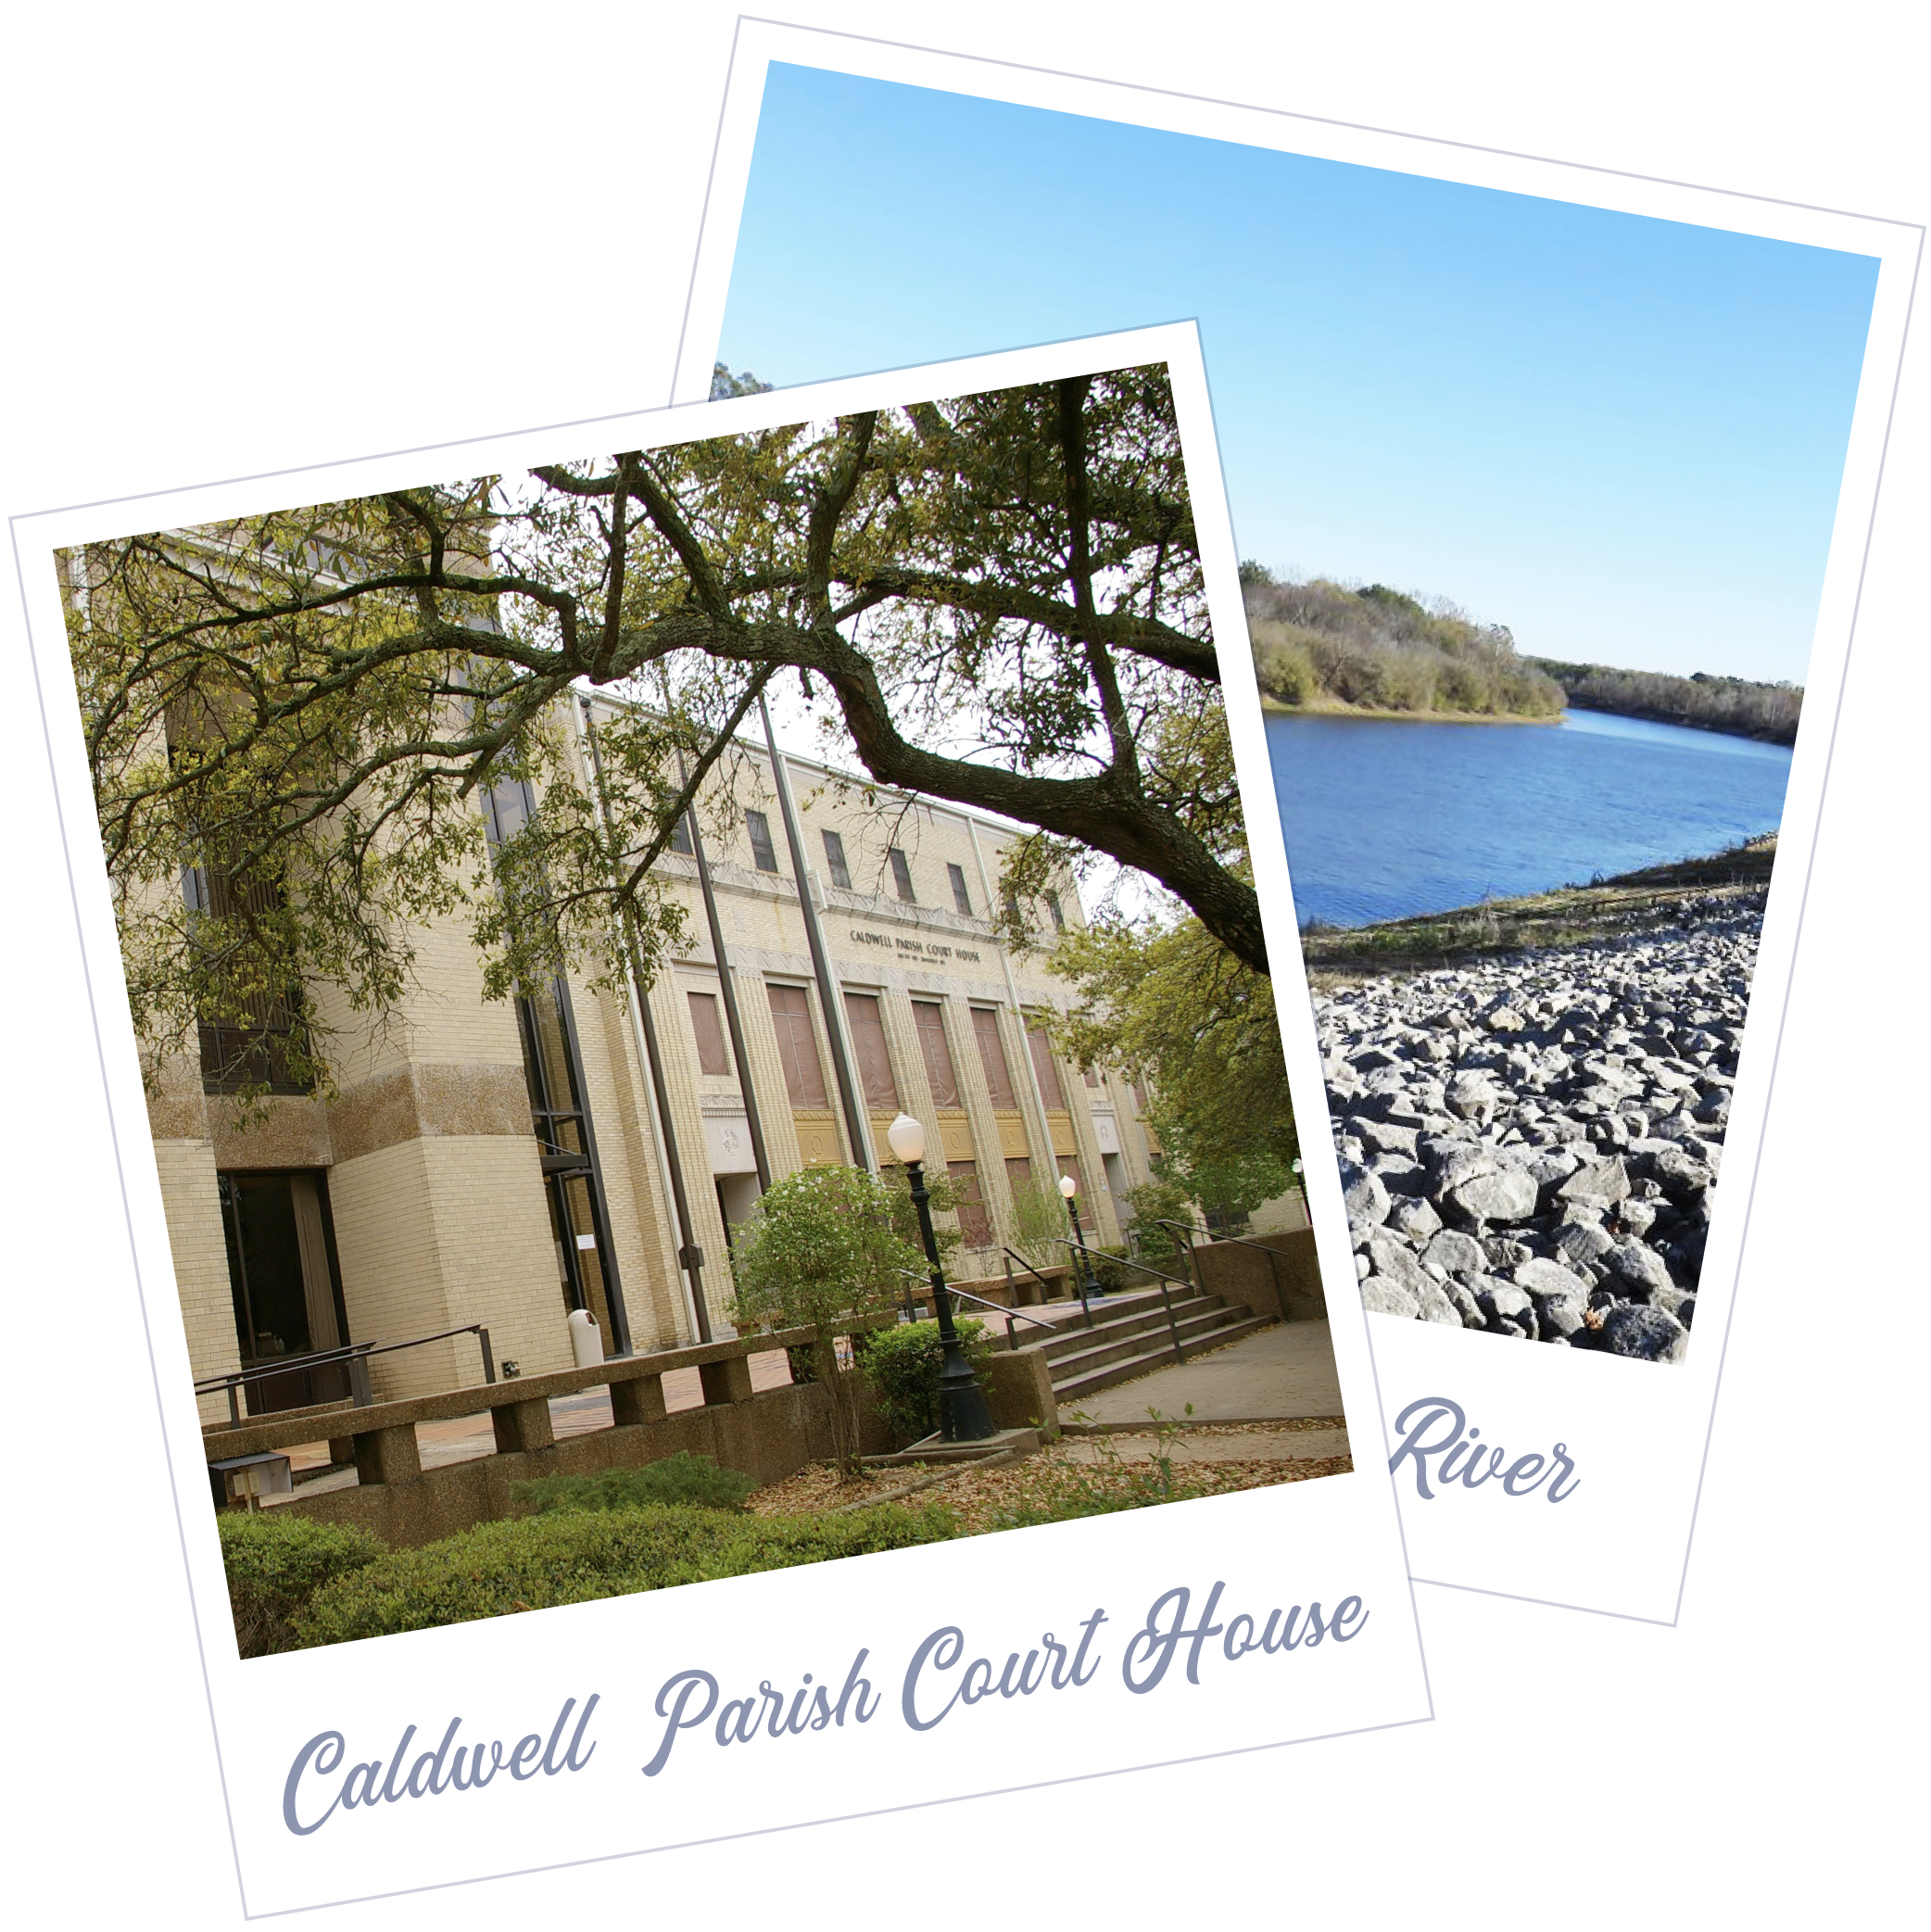 Caldwell Parish Mayors & Public Figures